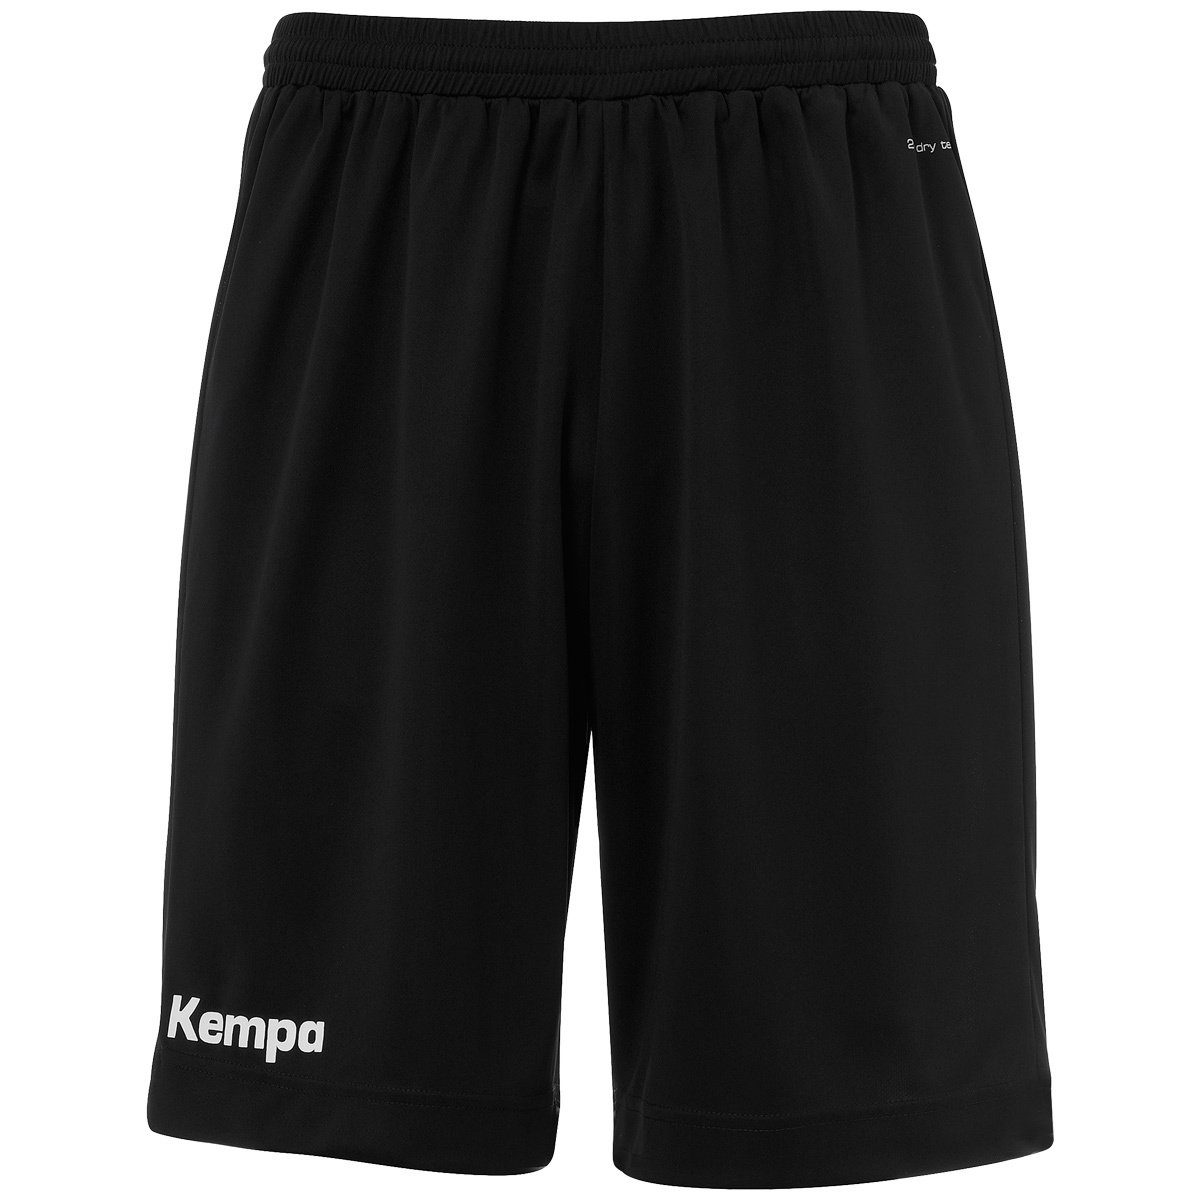 Kempa Shorts schwarz/weiß Shorts PLAYER Kempa